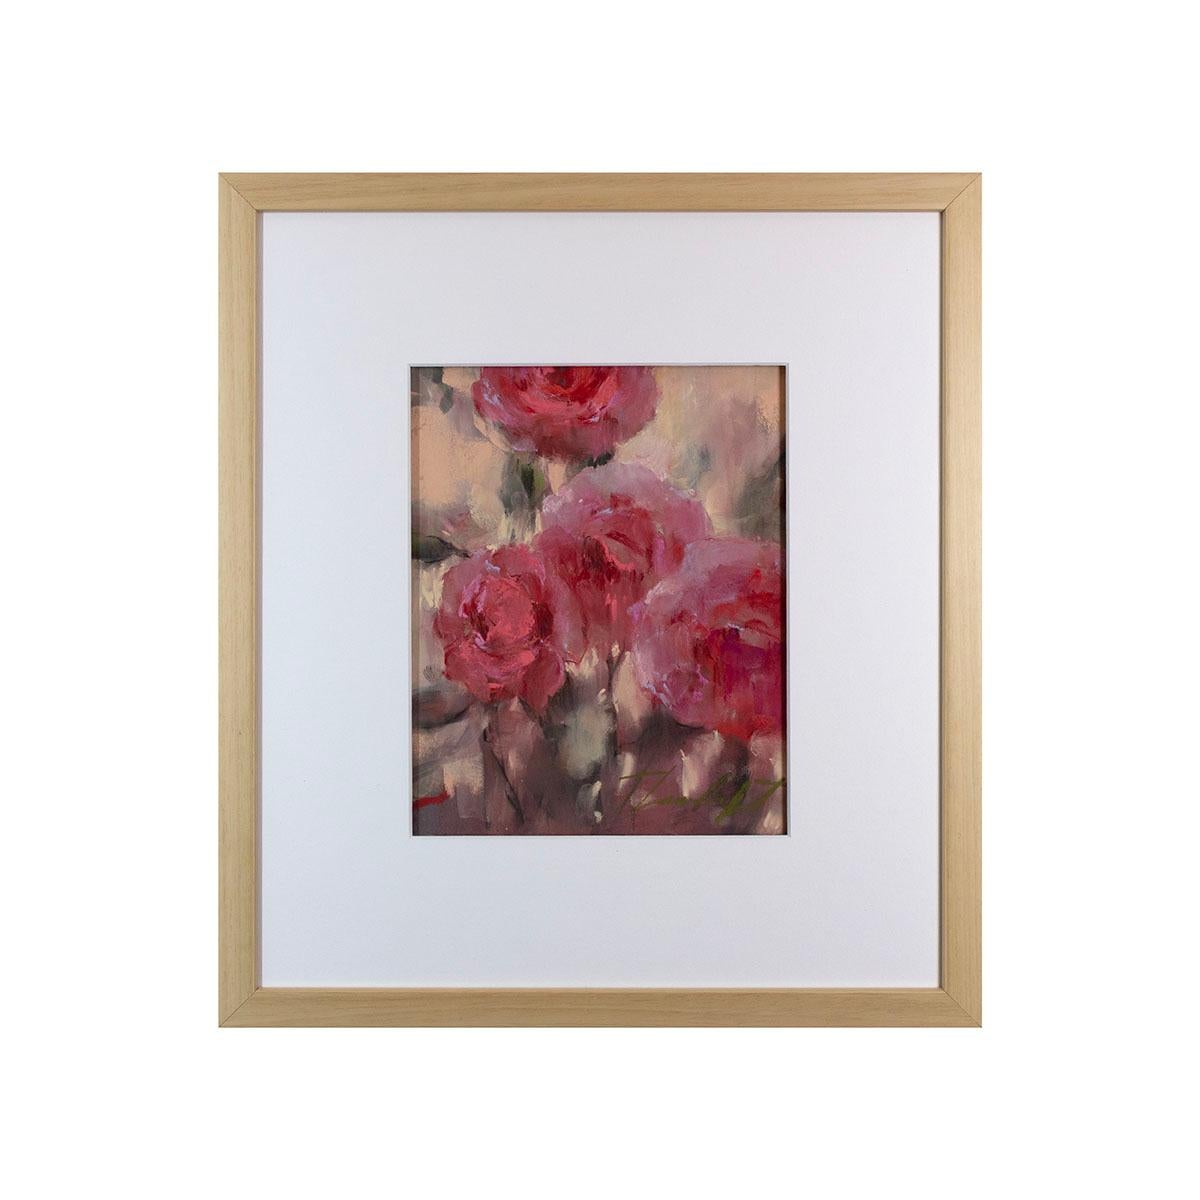 Julia Lambright
Before Night
Soft pastel on pastel board
Image size: 9.5” x 8”
Framed size: 17” x 15.5”
2023